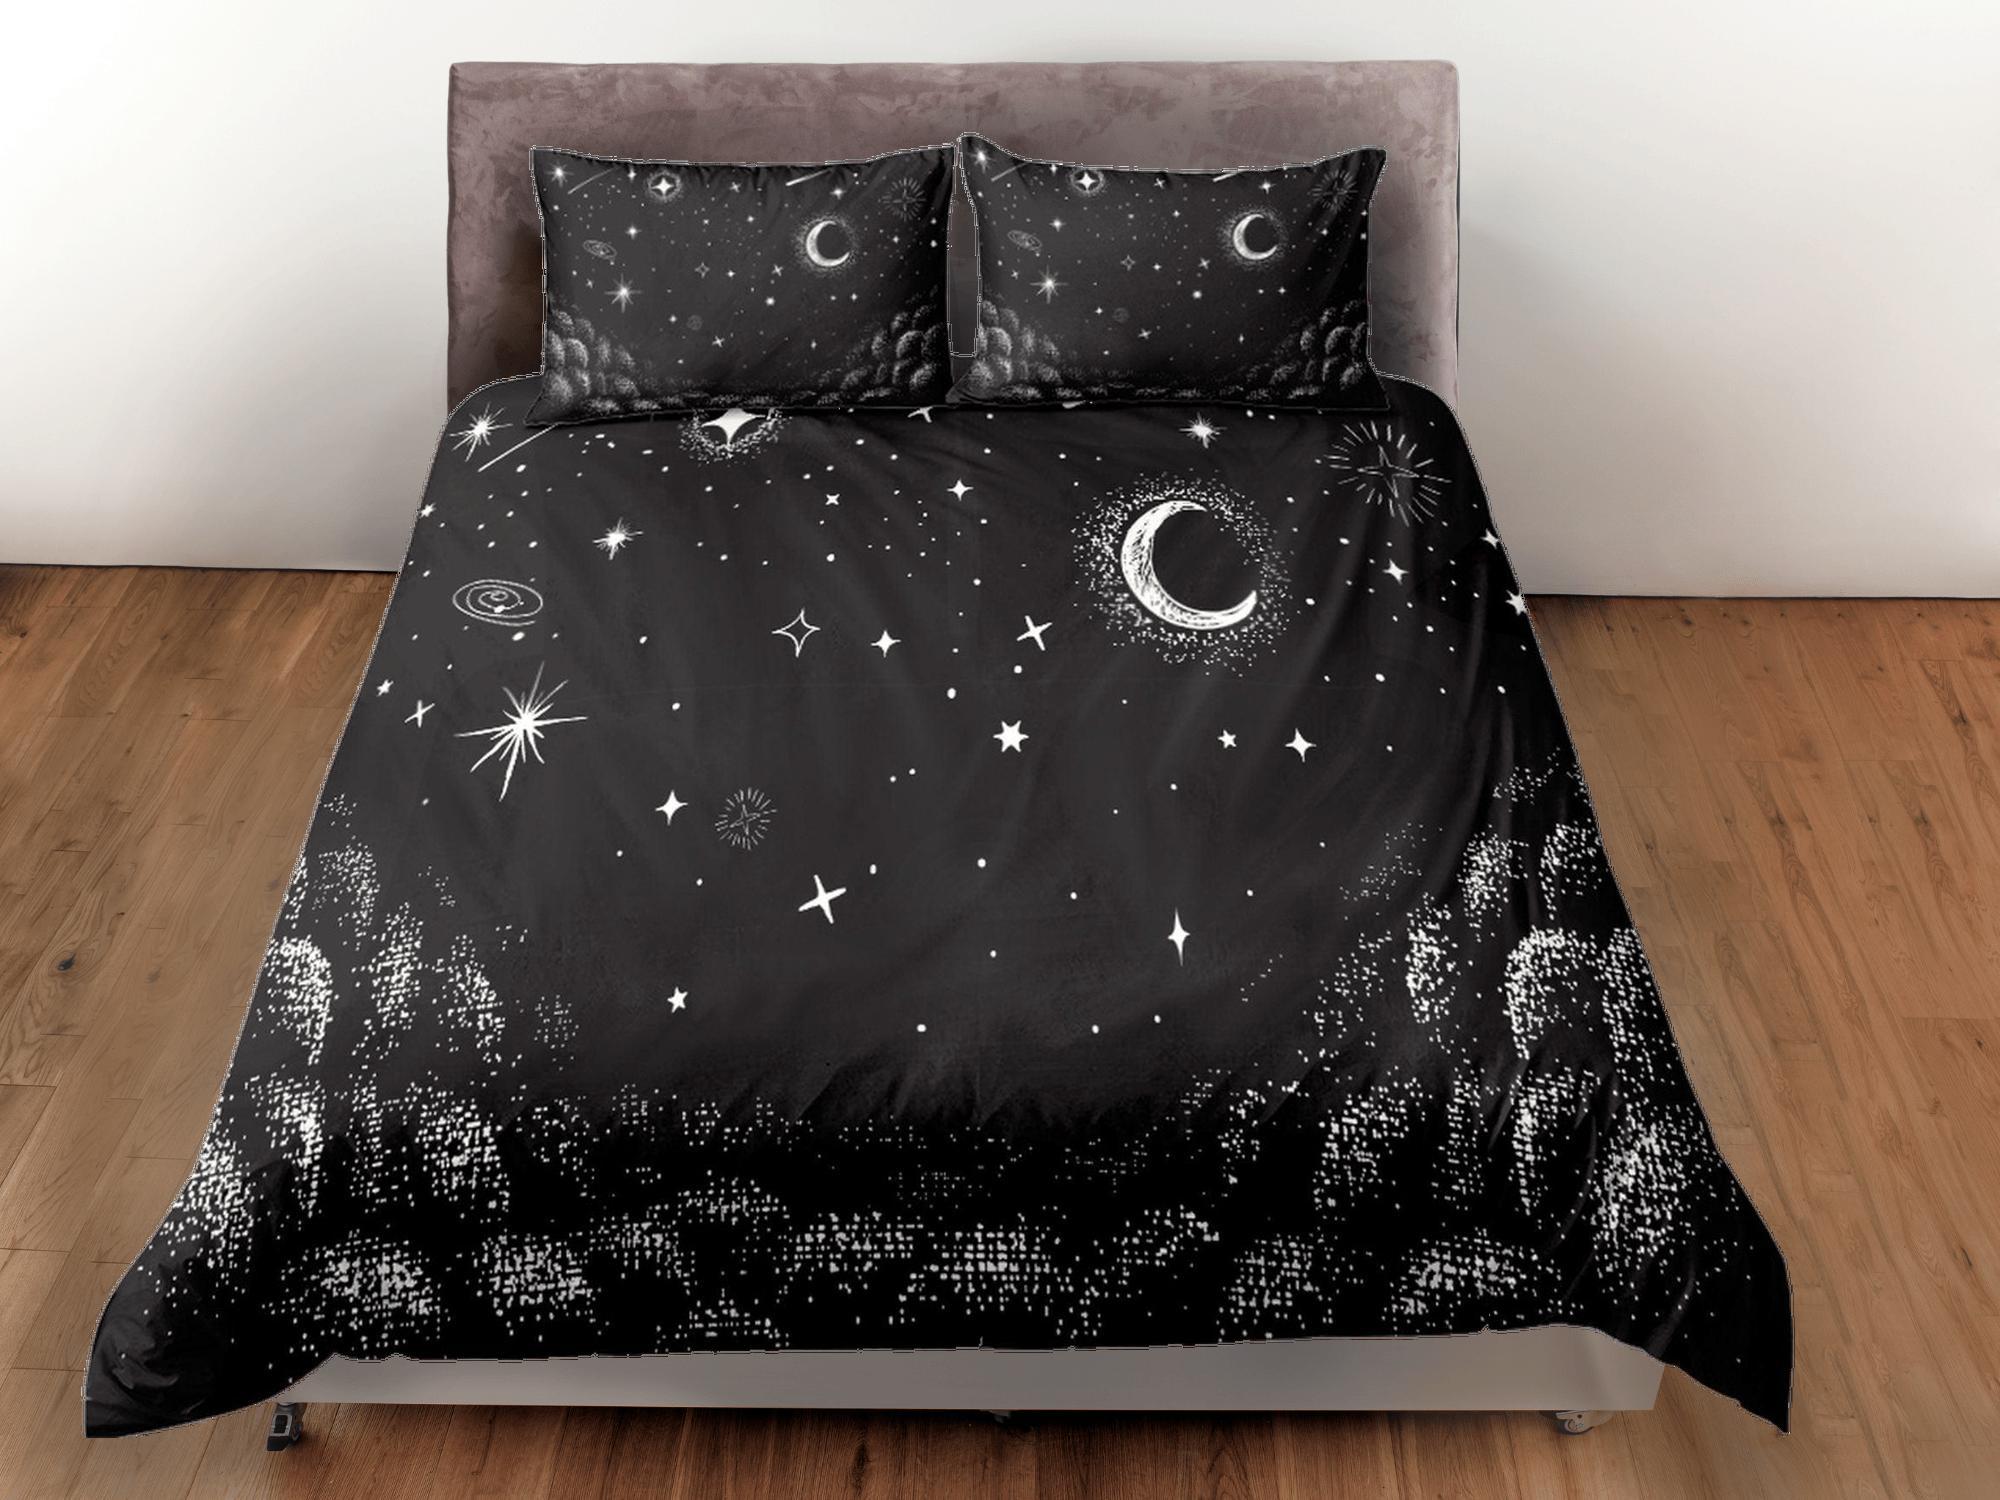 daintyduvet Moon Stars Galaxy Black Duvet Cover Set Bedspread, Dorm Bedding with Pillowcase